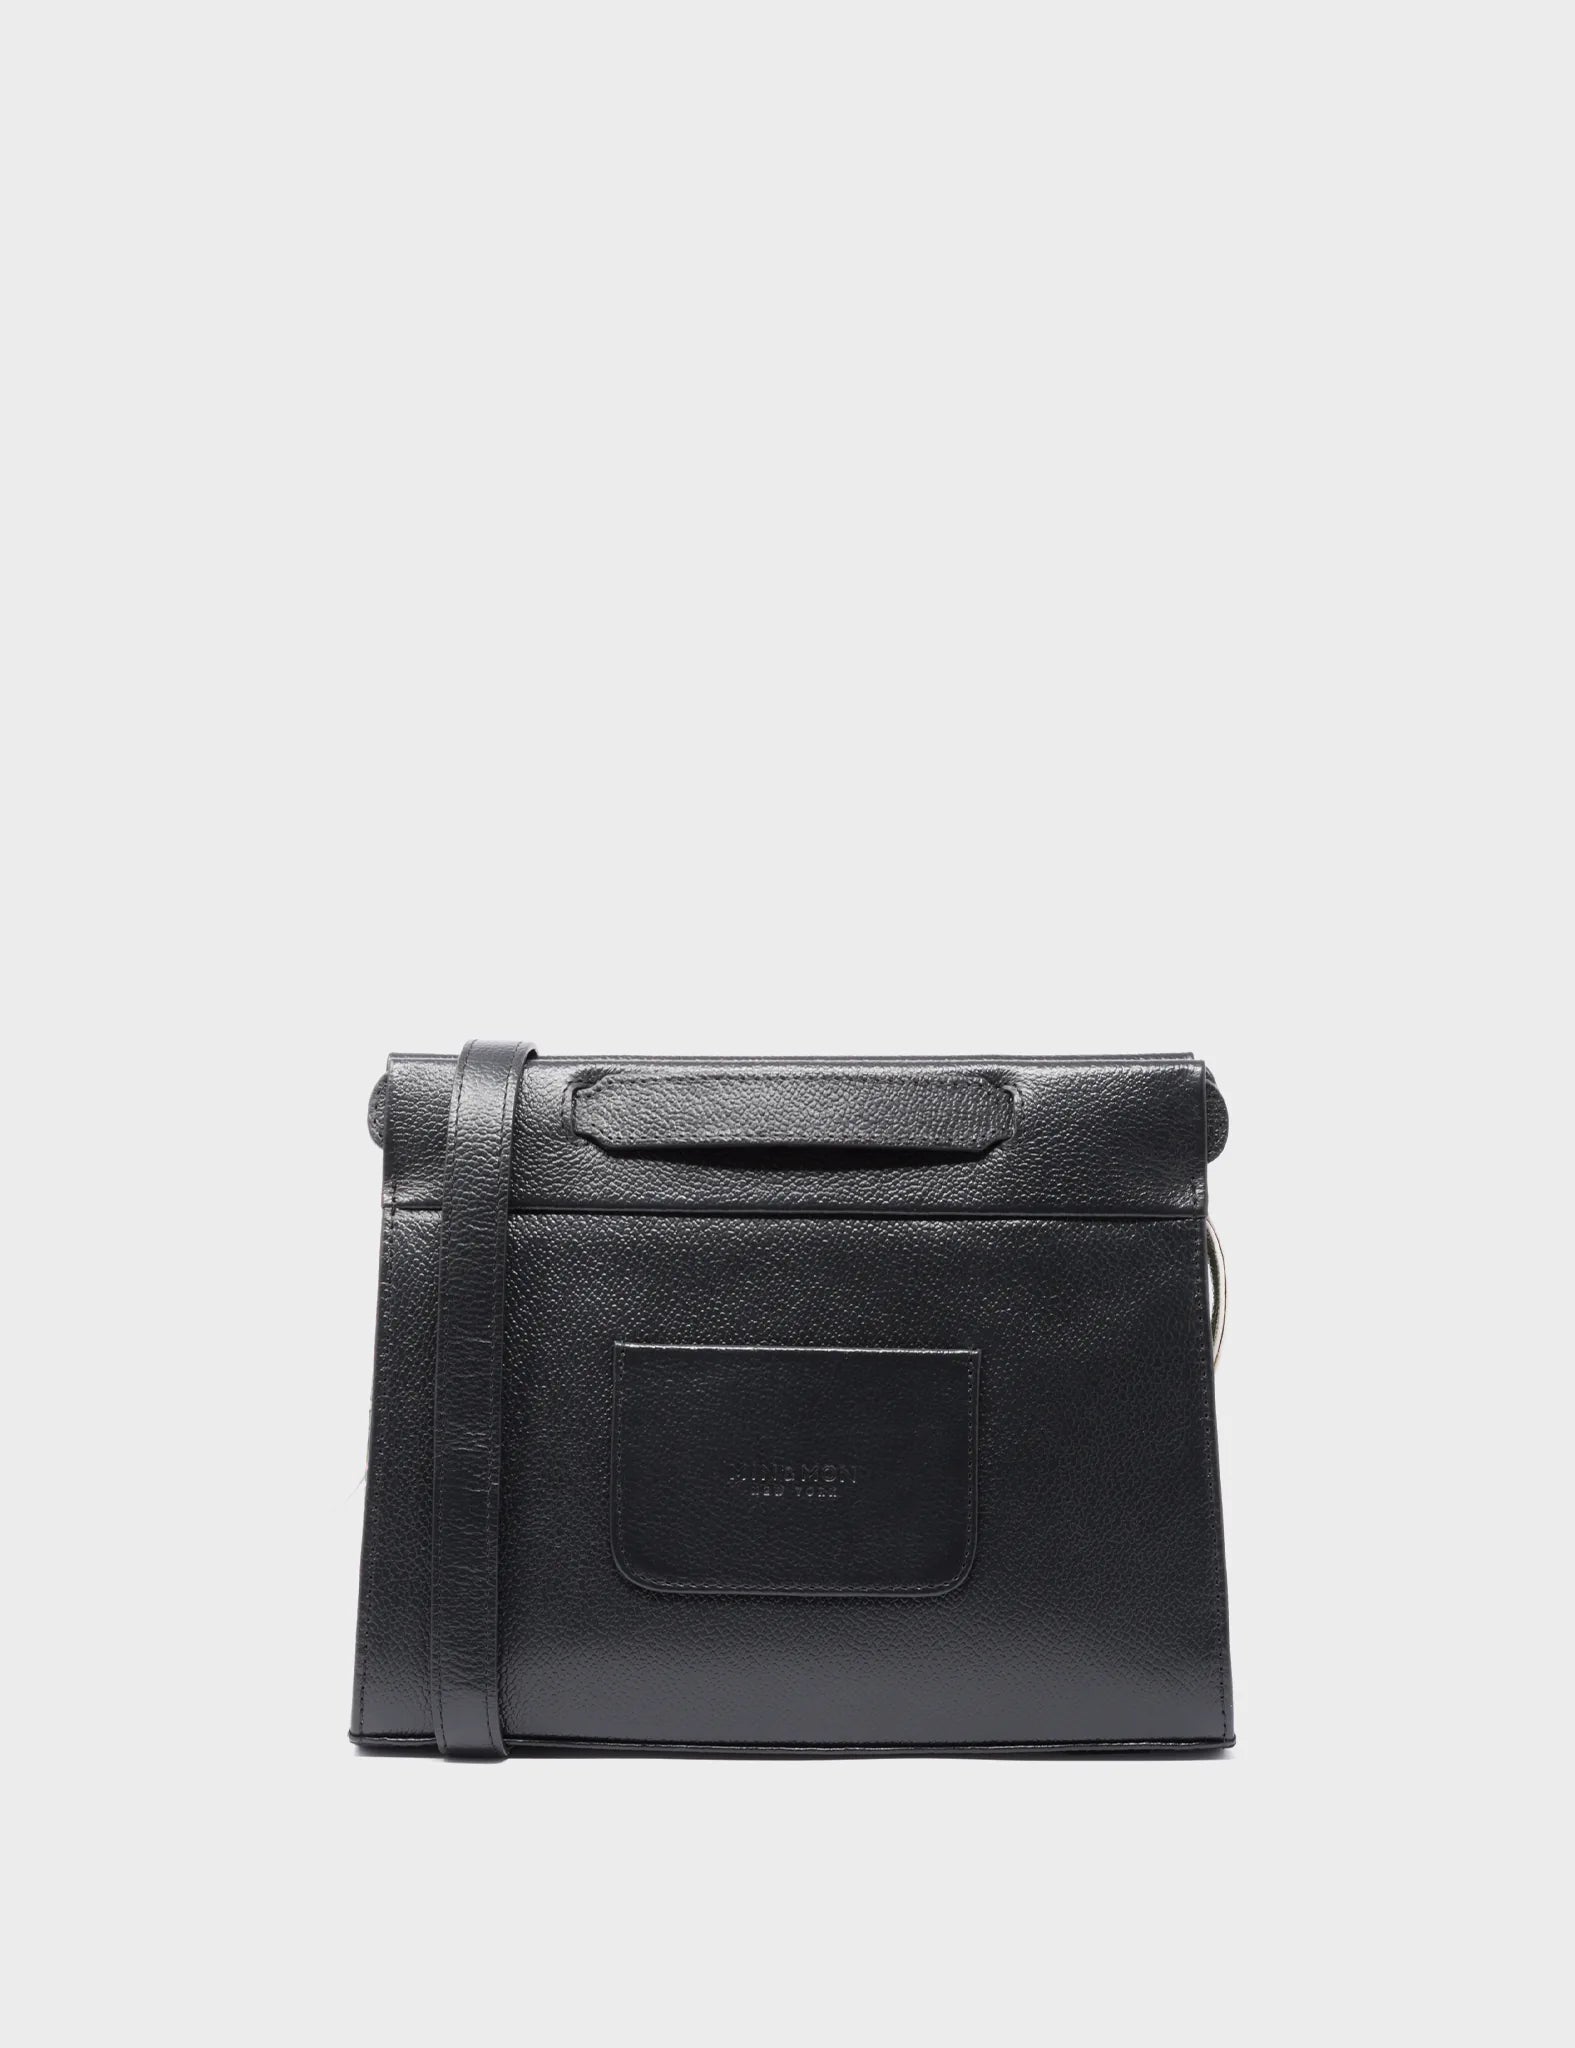 Vali Crossbody Small Black Leather Bag - El Tropico Print Design - back 